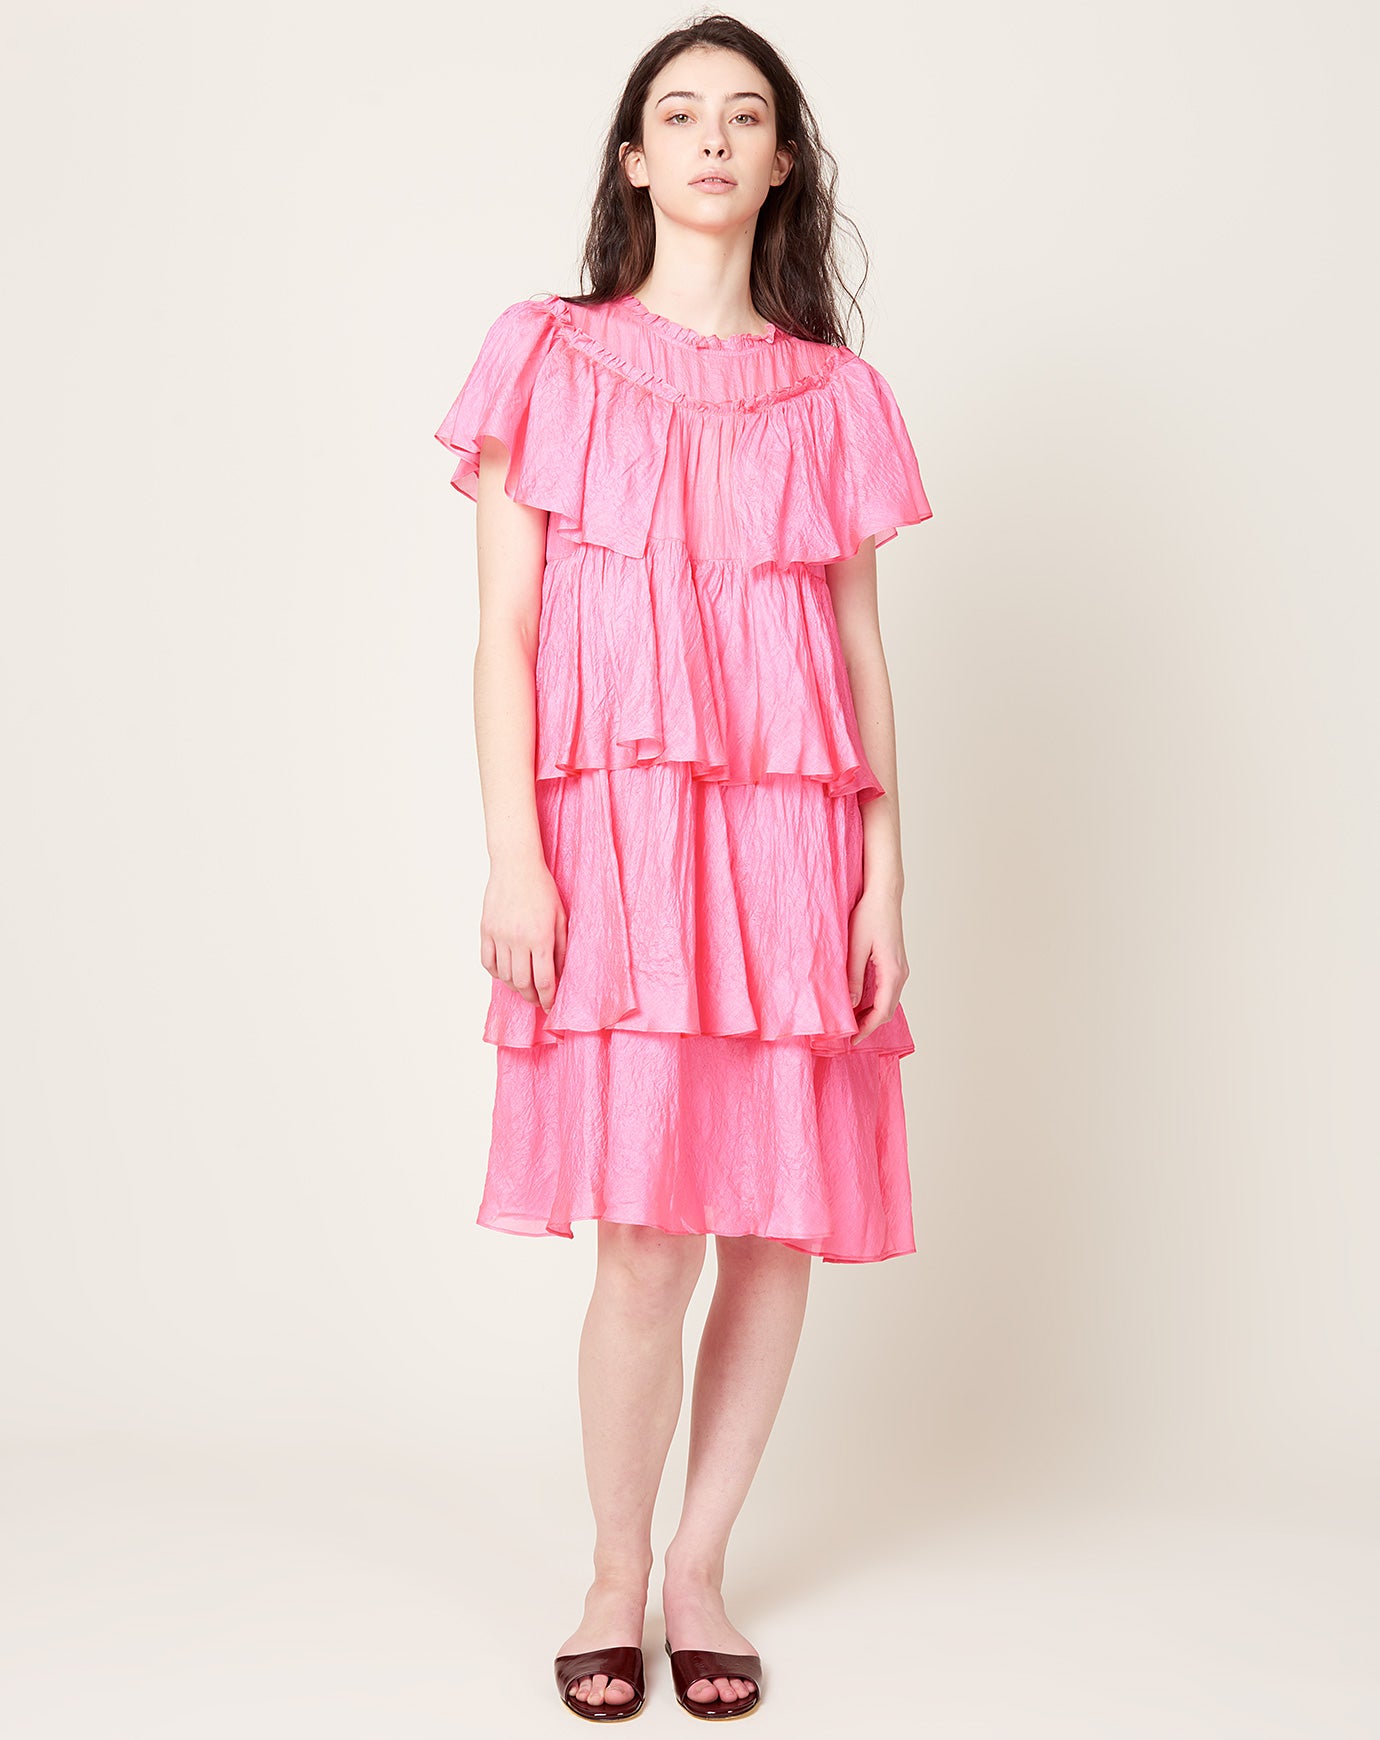 Anaak Yeha Ruffle Mini Dress in Shocking Pink